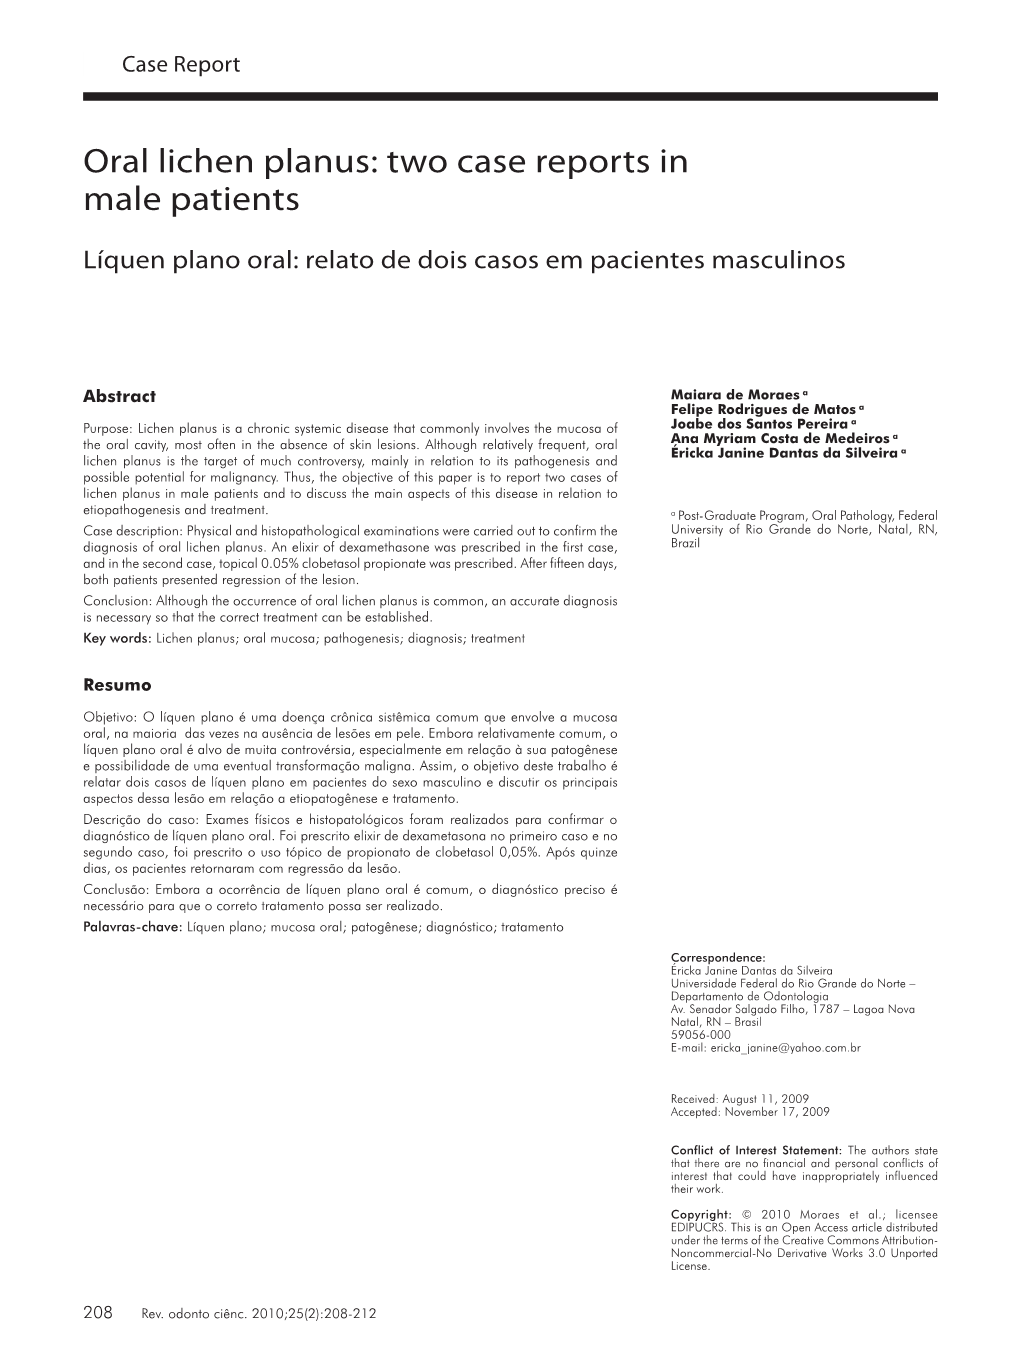 Oral Lichen Planus: Two Case Reports in Male Patients